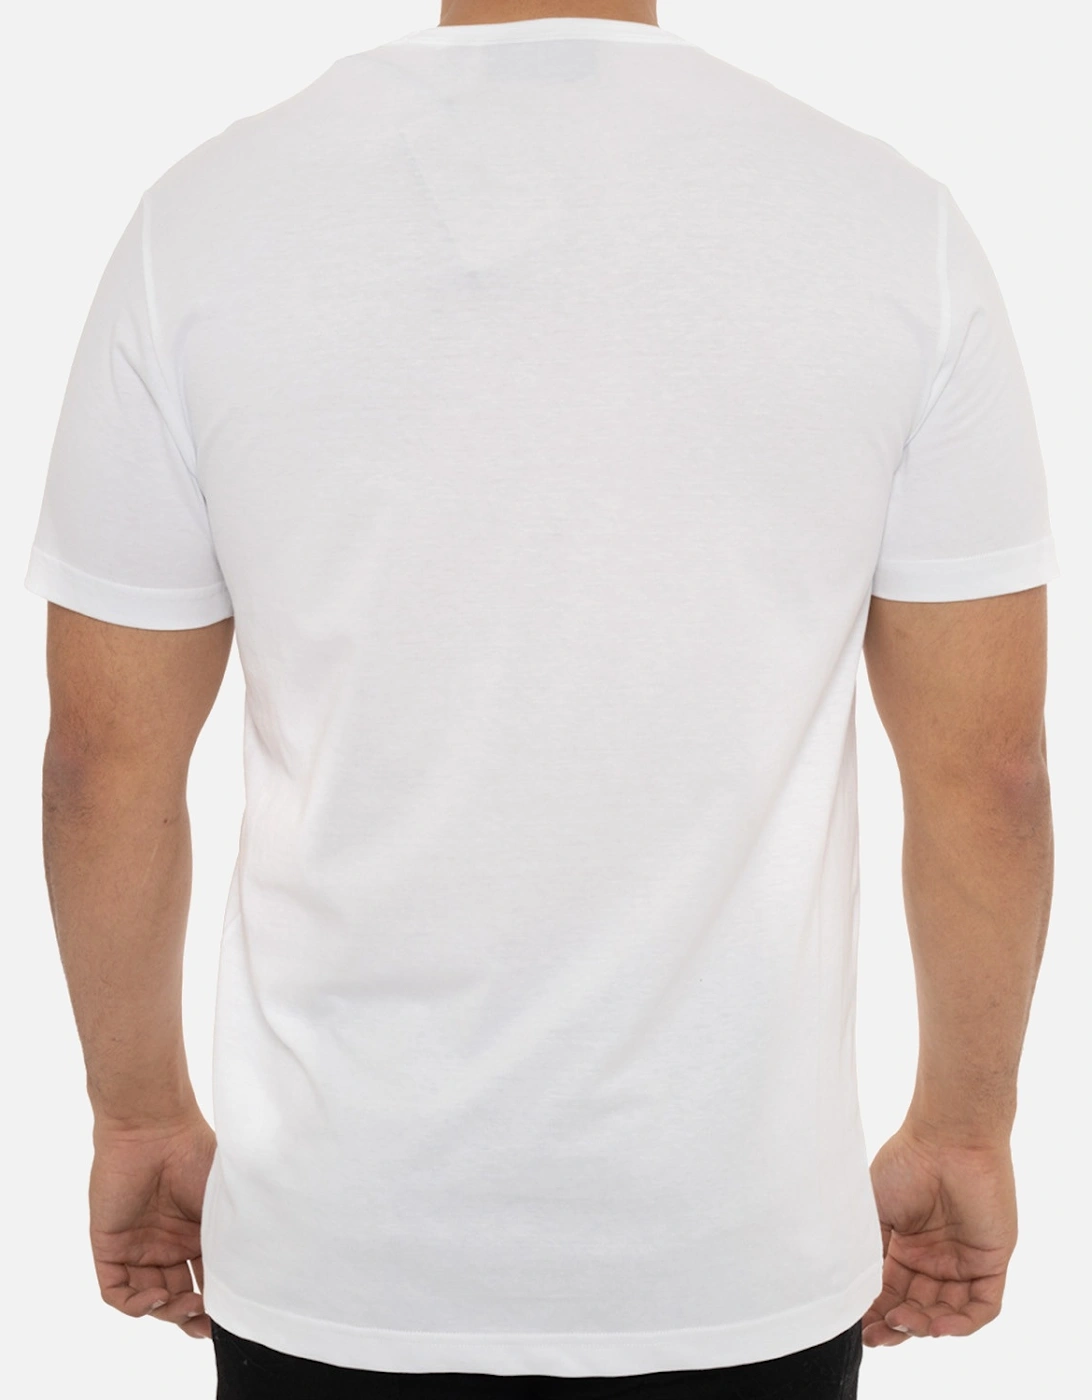 Mens Phoenix Emblem T-Shirt (White)